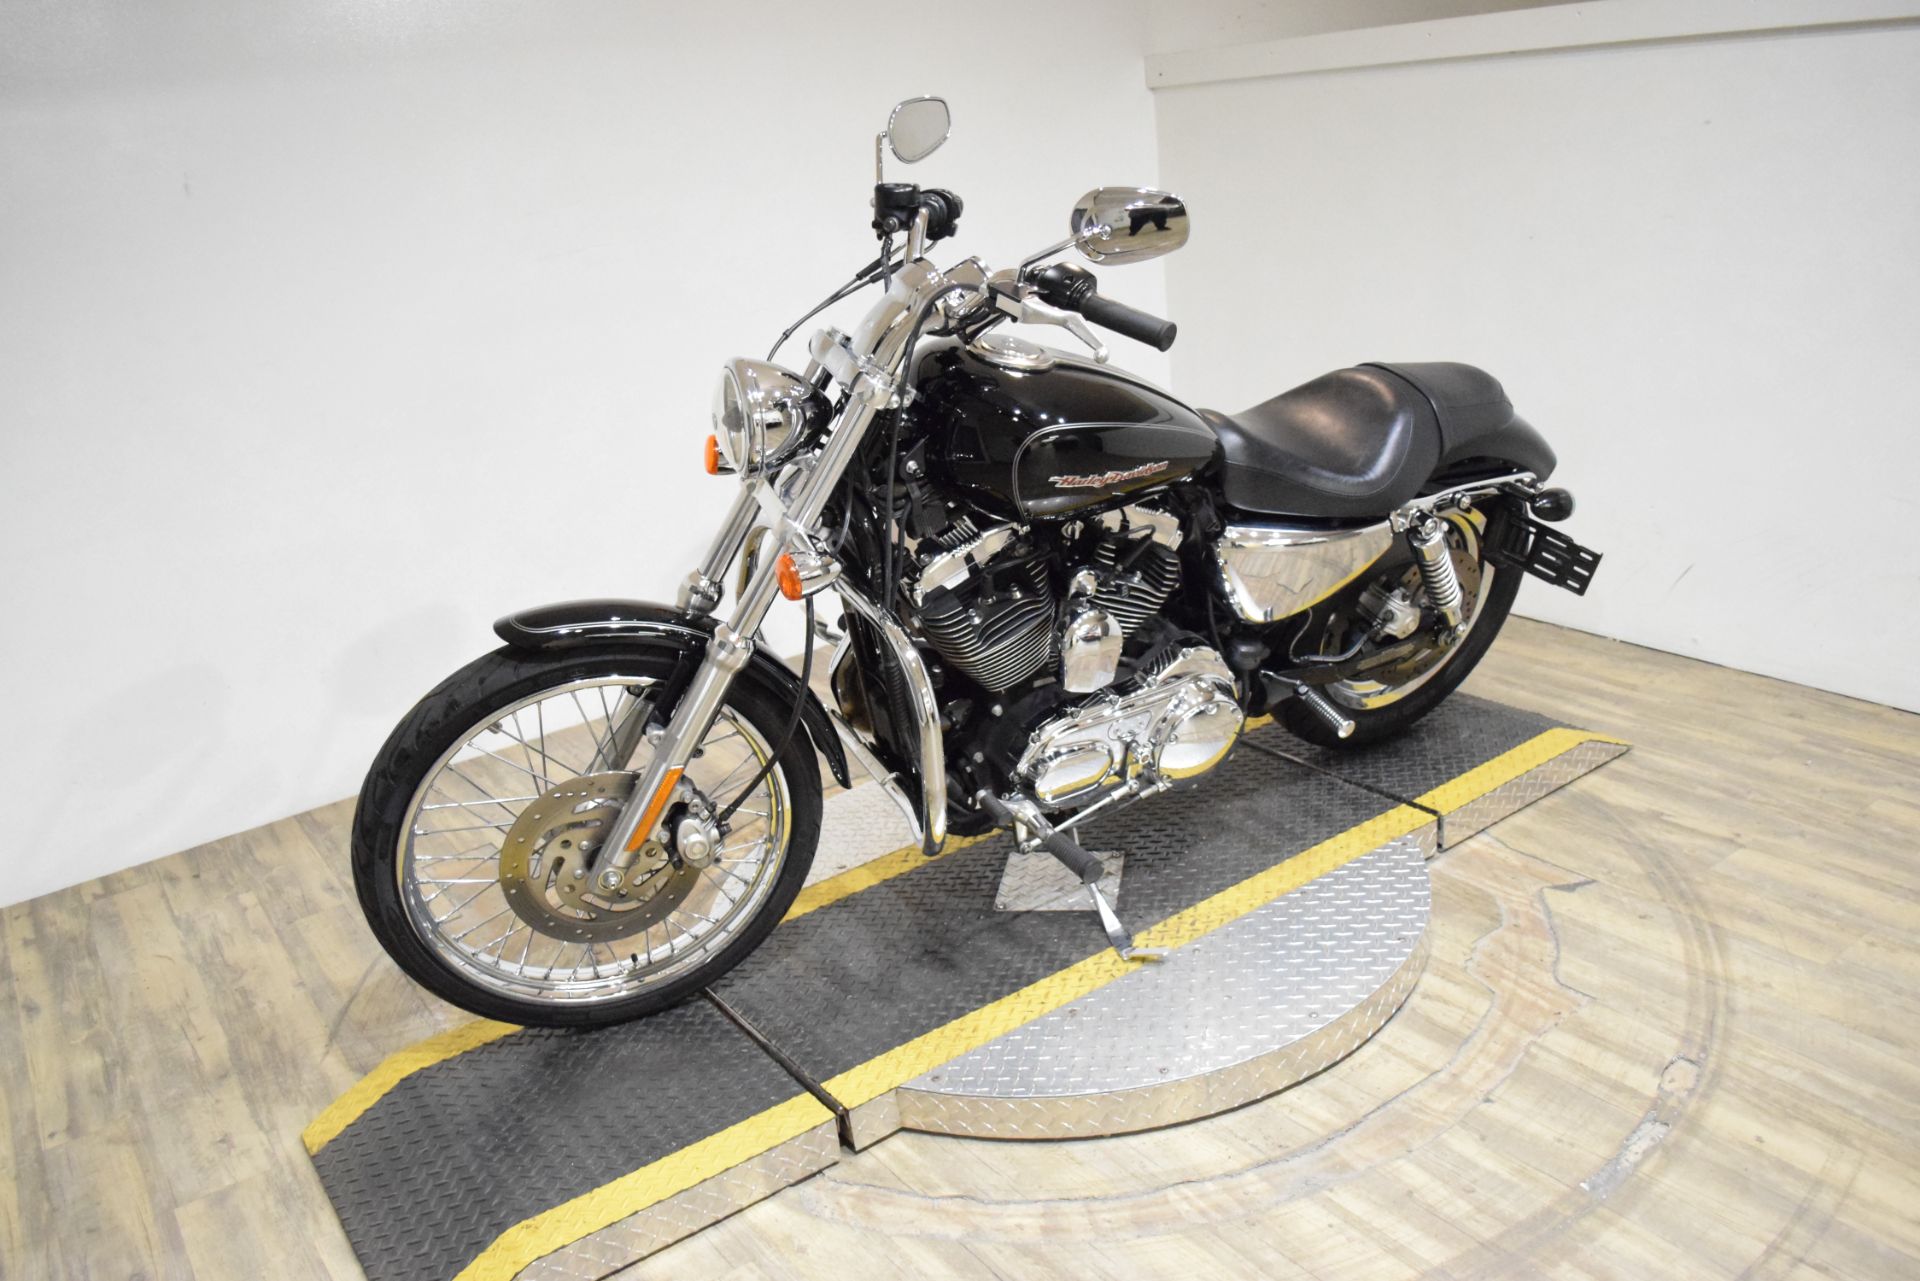 2006 Harley-Davidson Sportster® 1200 Custom in Wauconda, Illinois - Photo 22